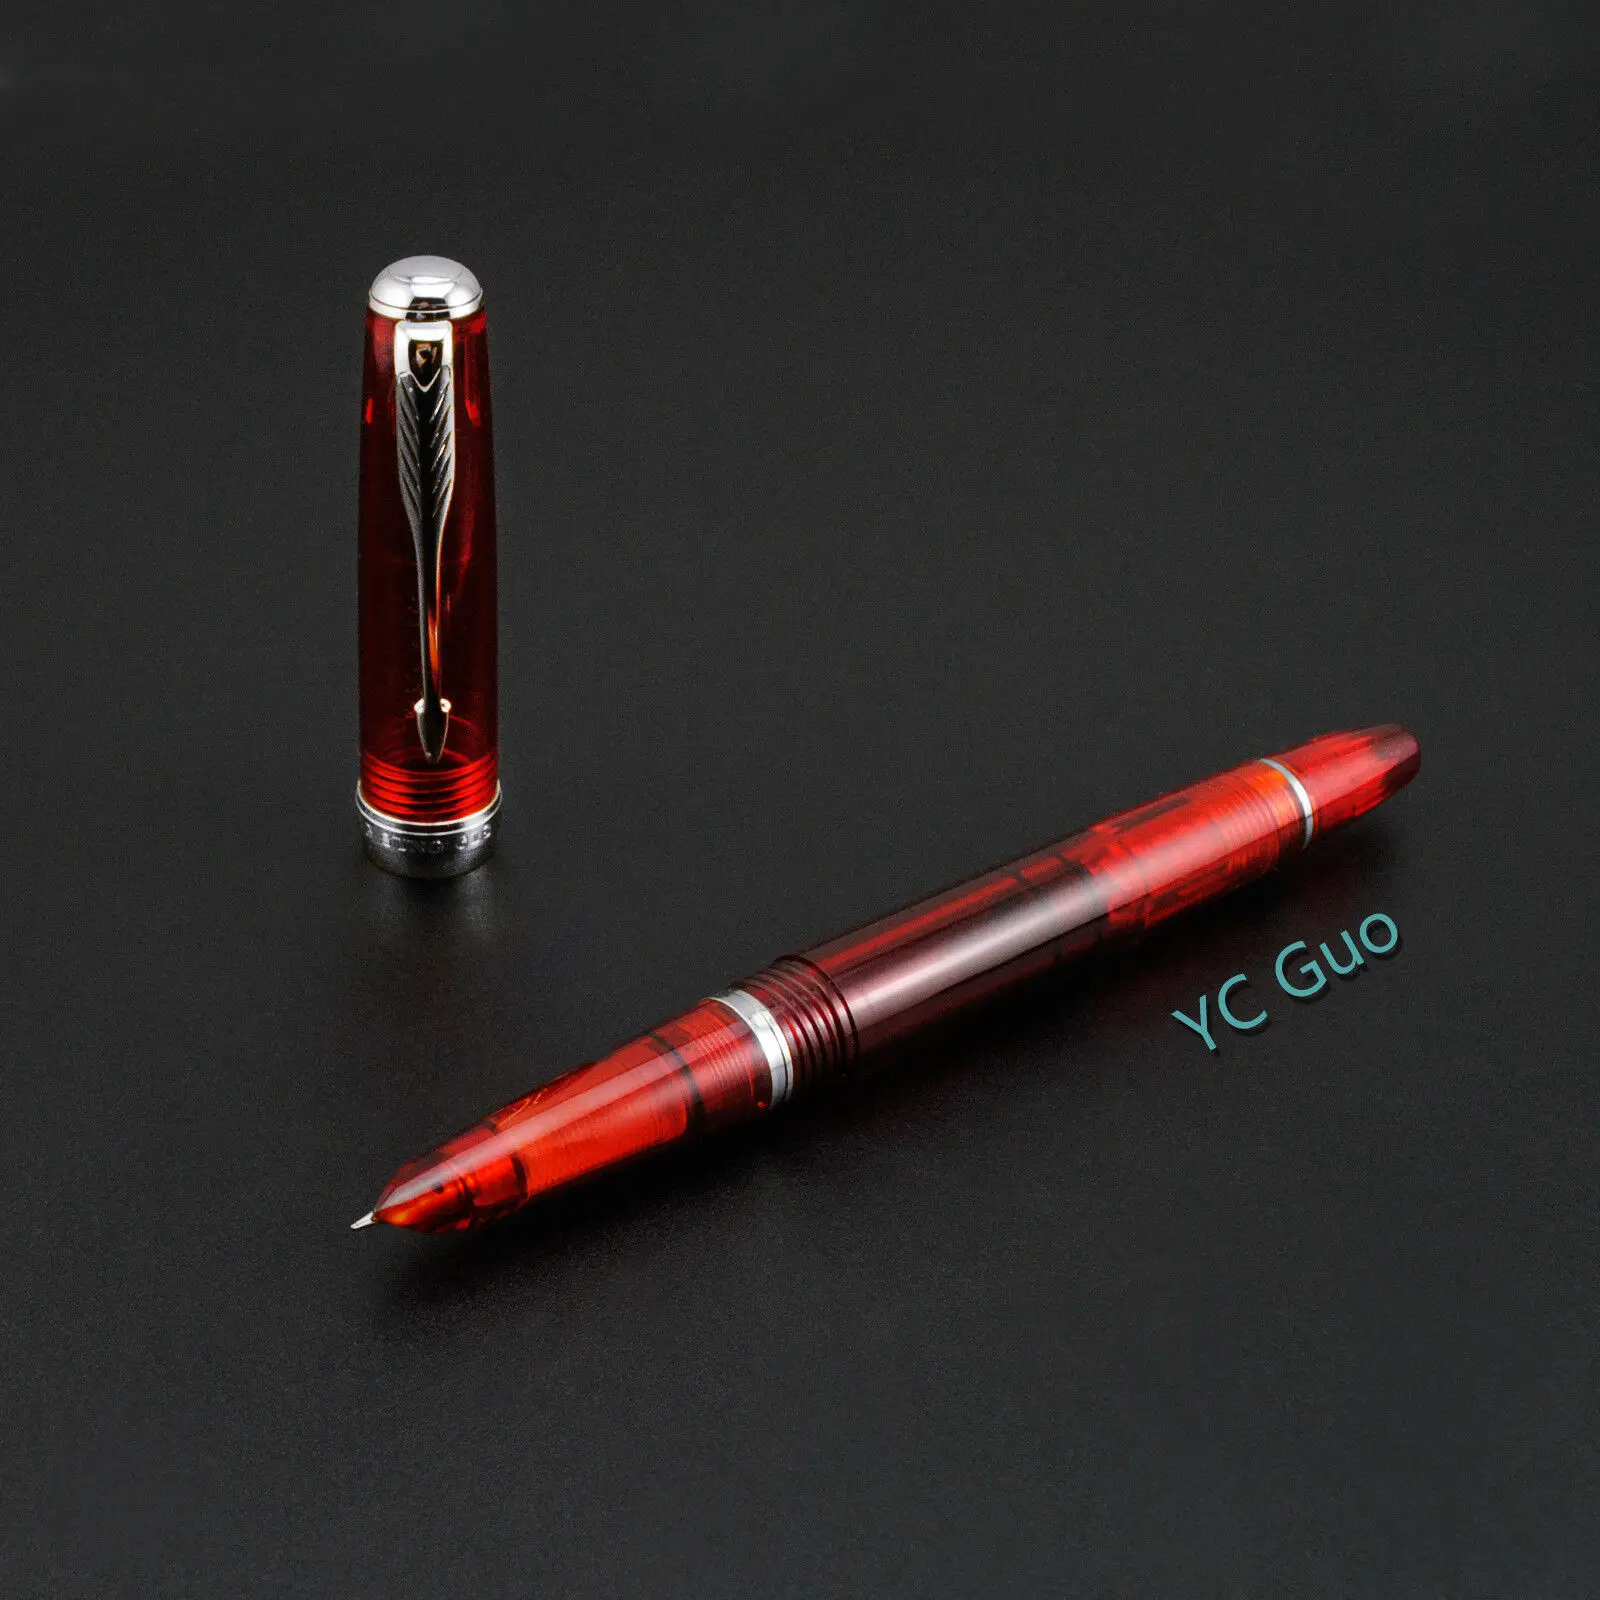 2020 Wing Sung 618 Piston Red Fountain Pen Ink Pen Fine 0.5mm Nib Silver Clip Office school supplies